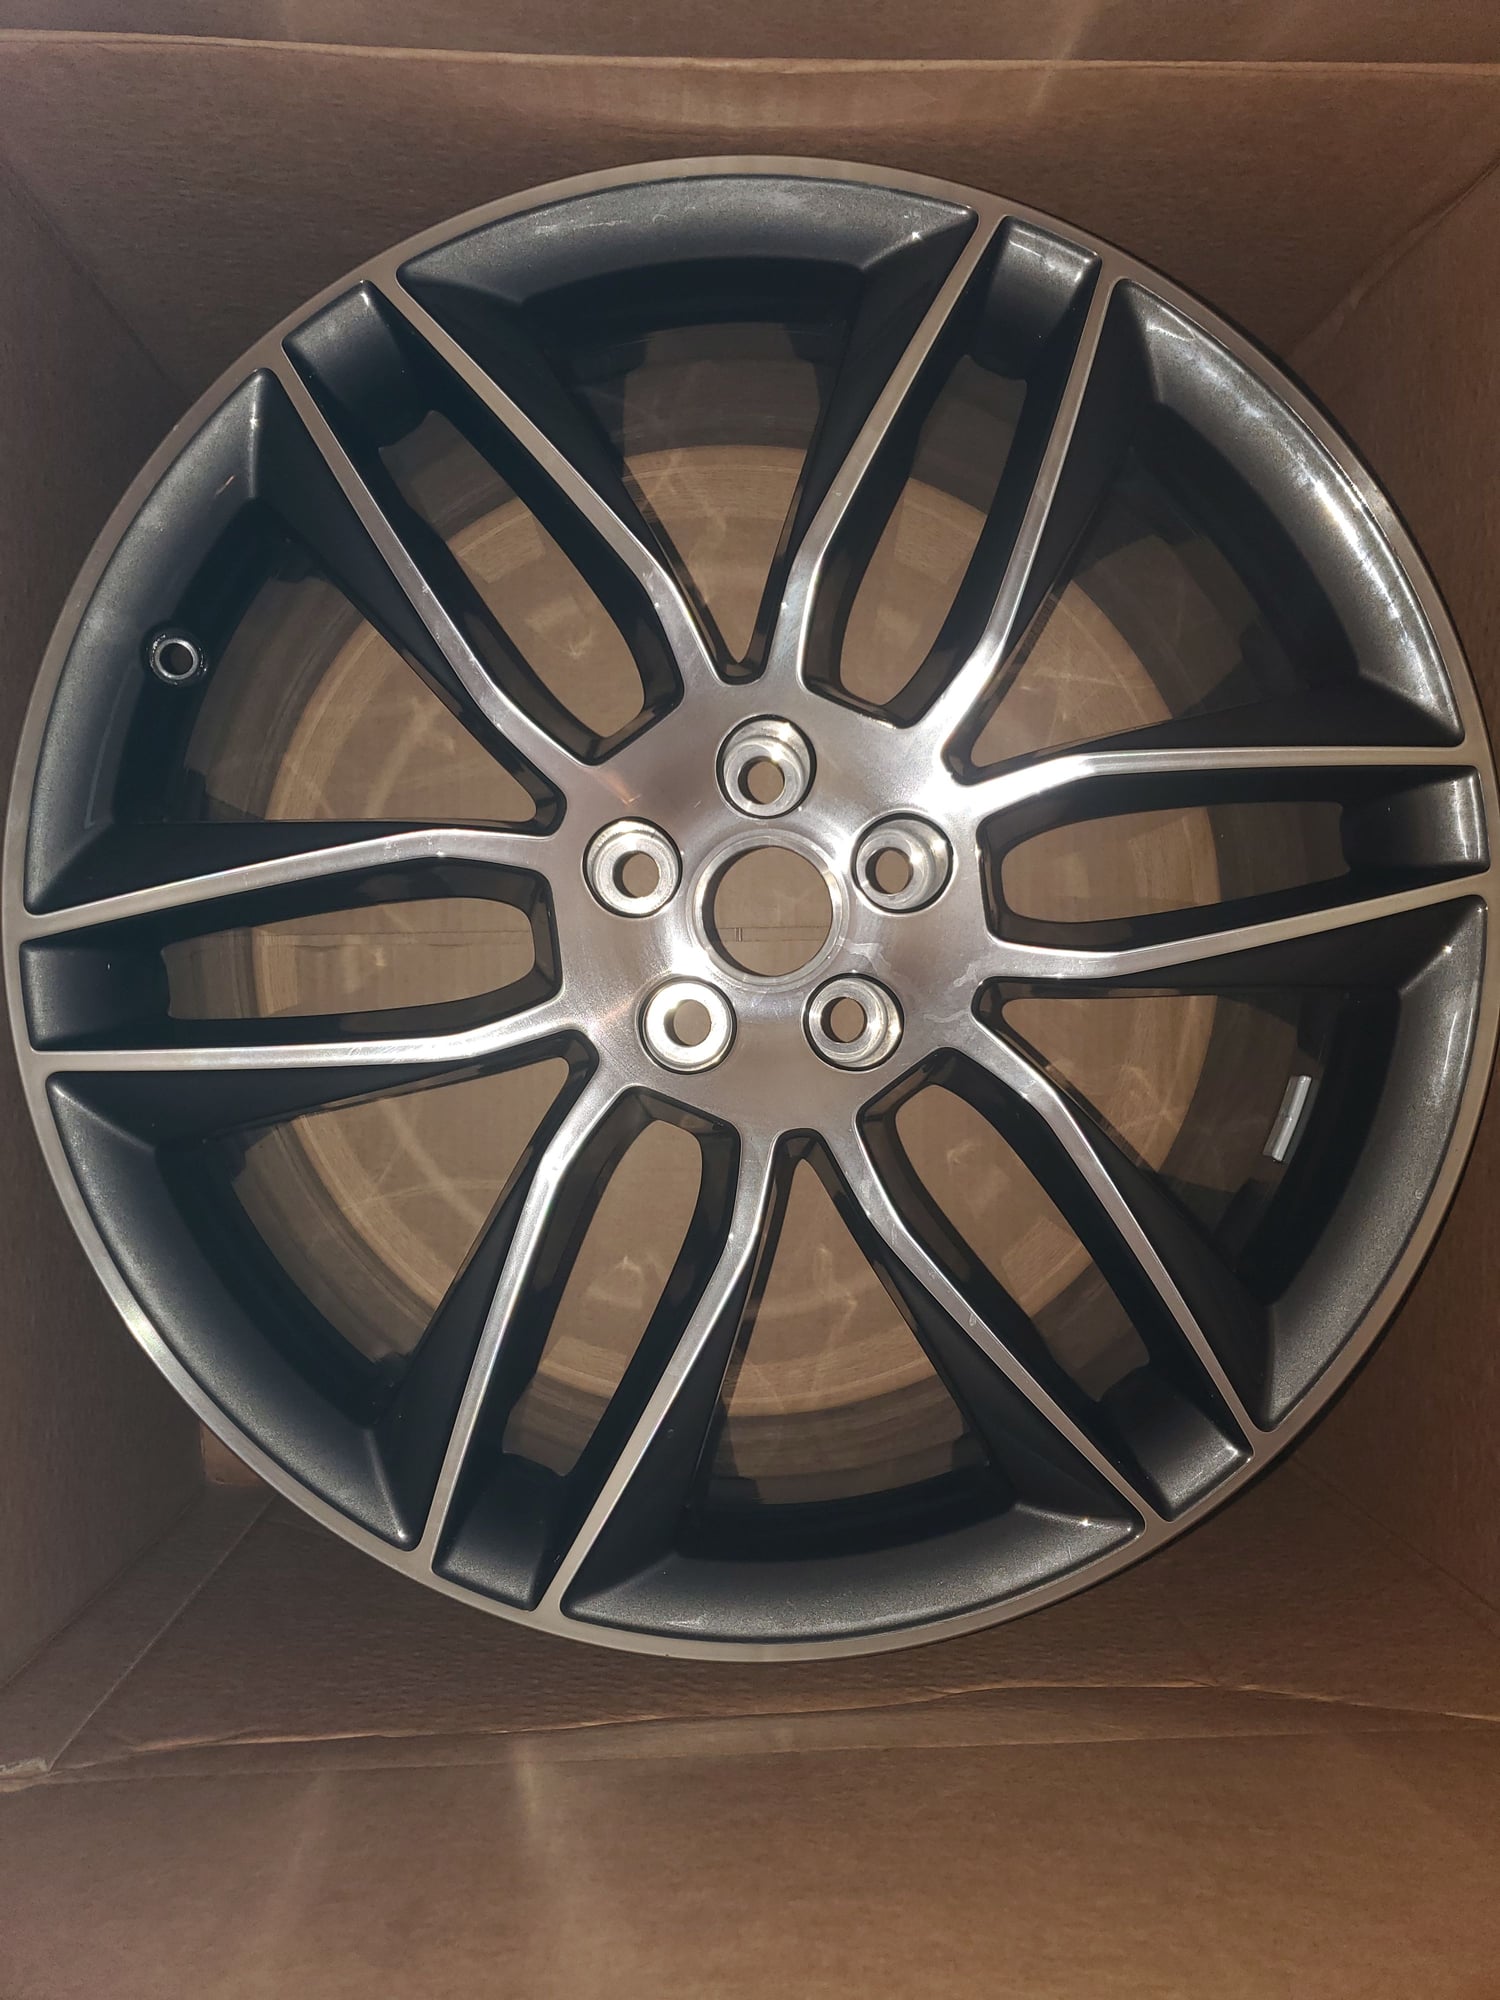 Wheels and Tires/Axles - (4 New) 20" Style 6003, 6 split-spoke, gloss dark grey - F-Type - New - 2021 Jaguar F-Type - Fairfax, VA 22030, United States